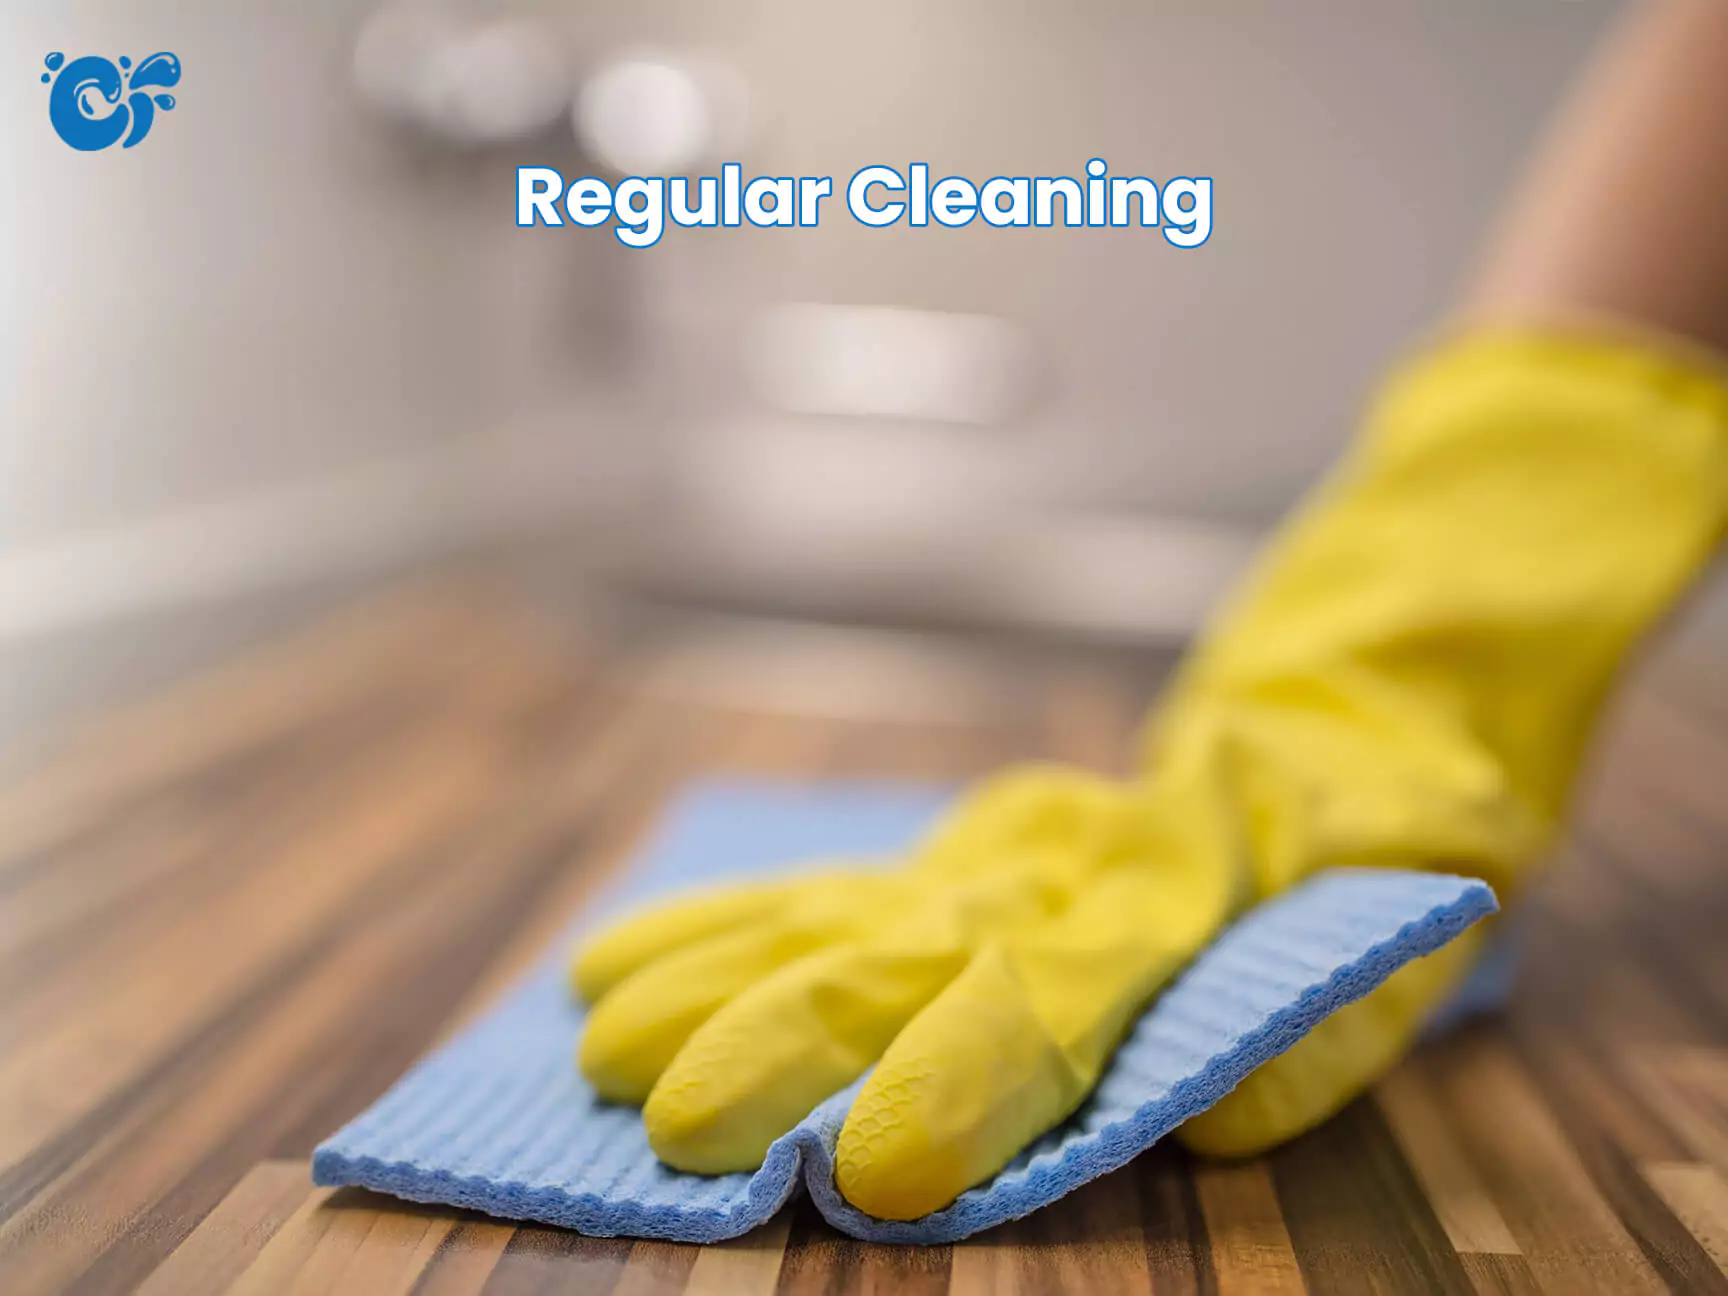 Regular Cleaning